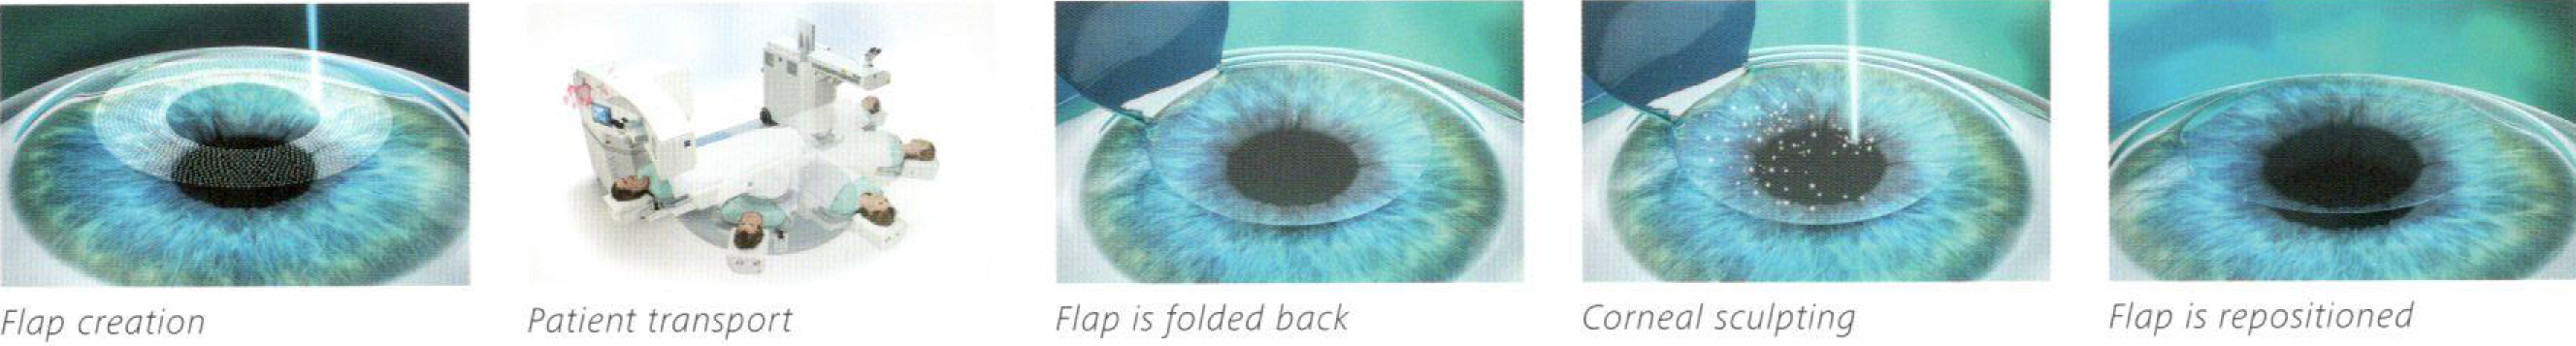 Augenlaser-Methoden mit Flapschnitt: Femtolasik 6D, Z-LASIK& iLASIK